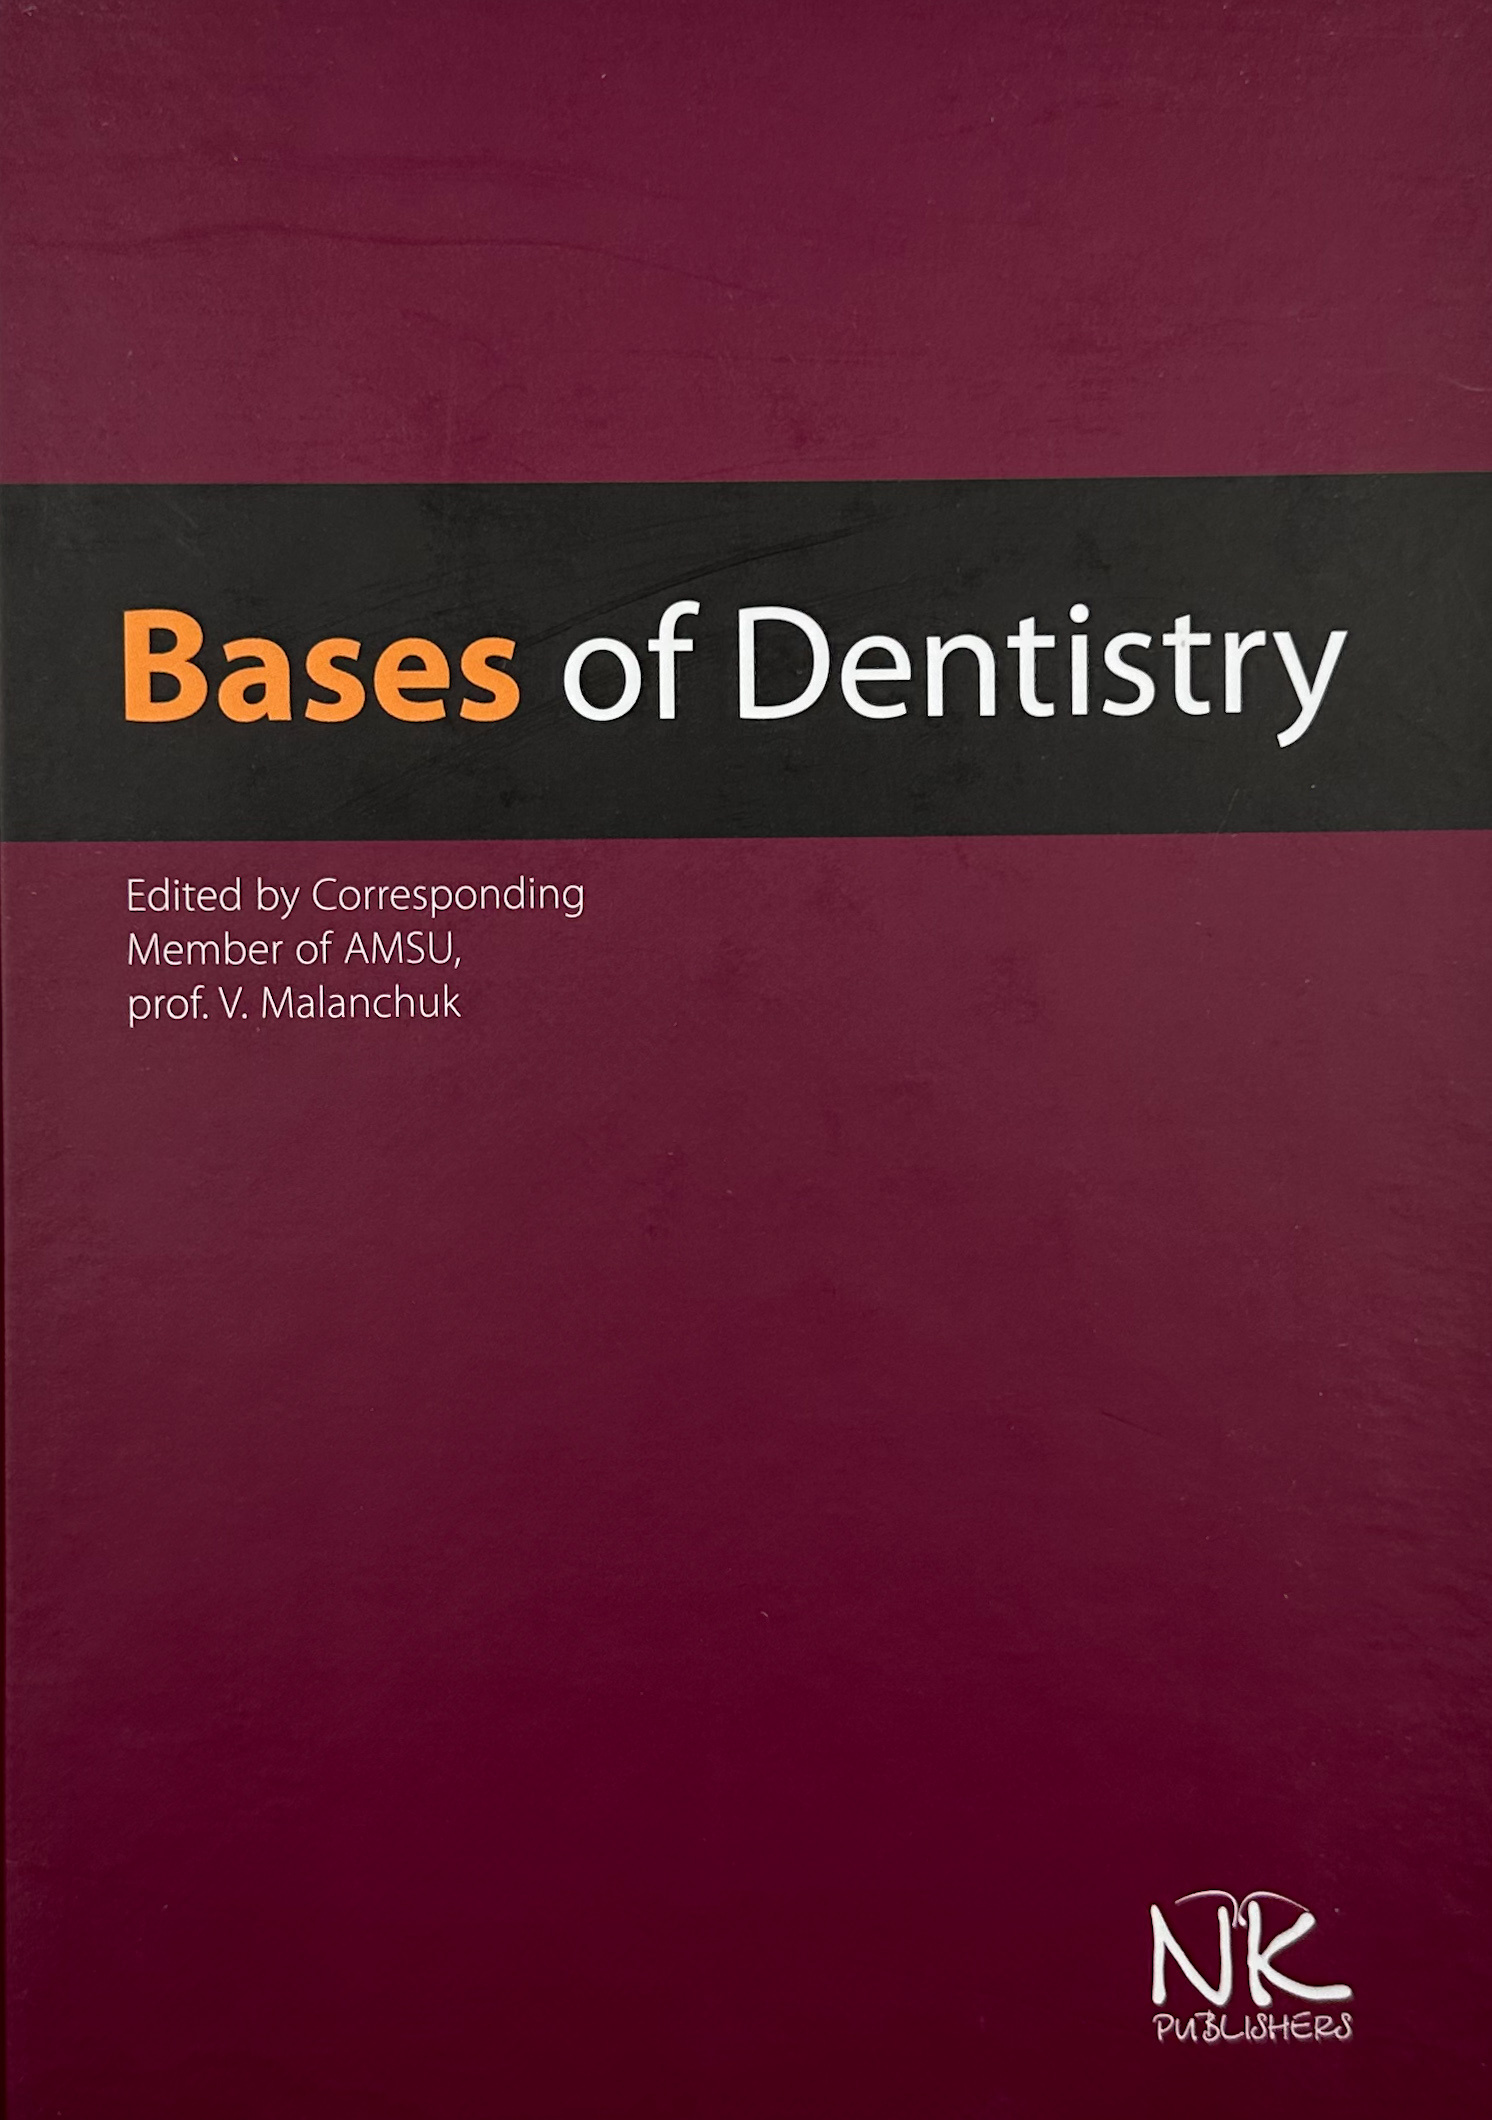 Basics of Dentistry